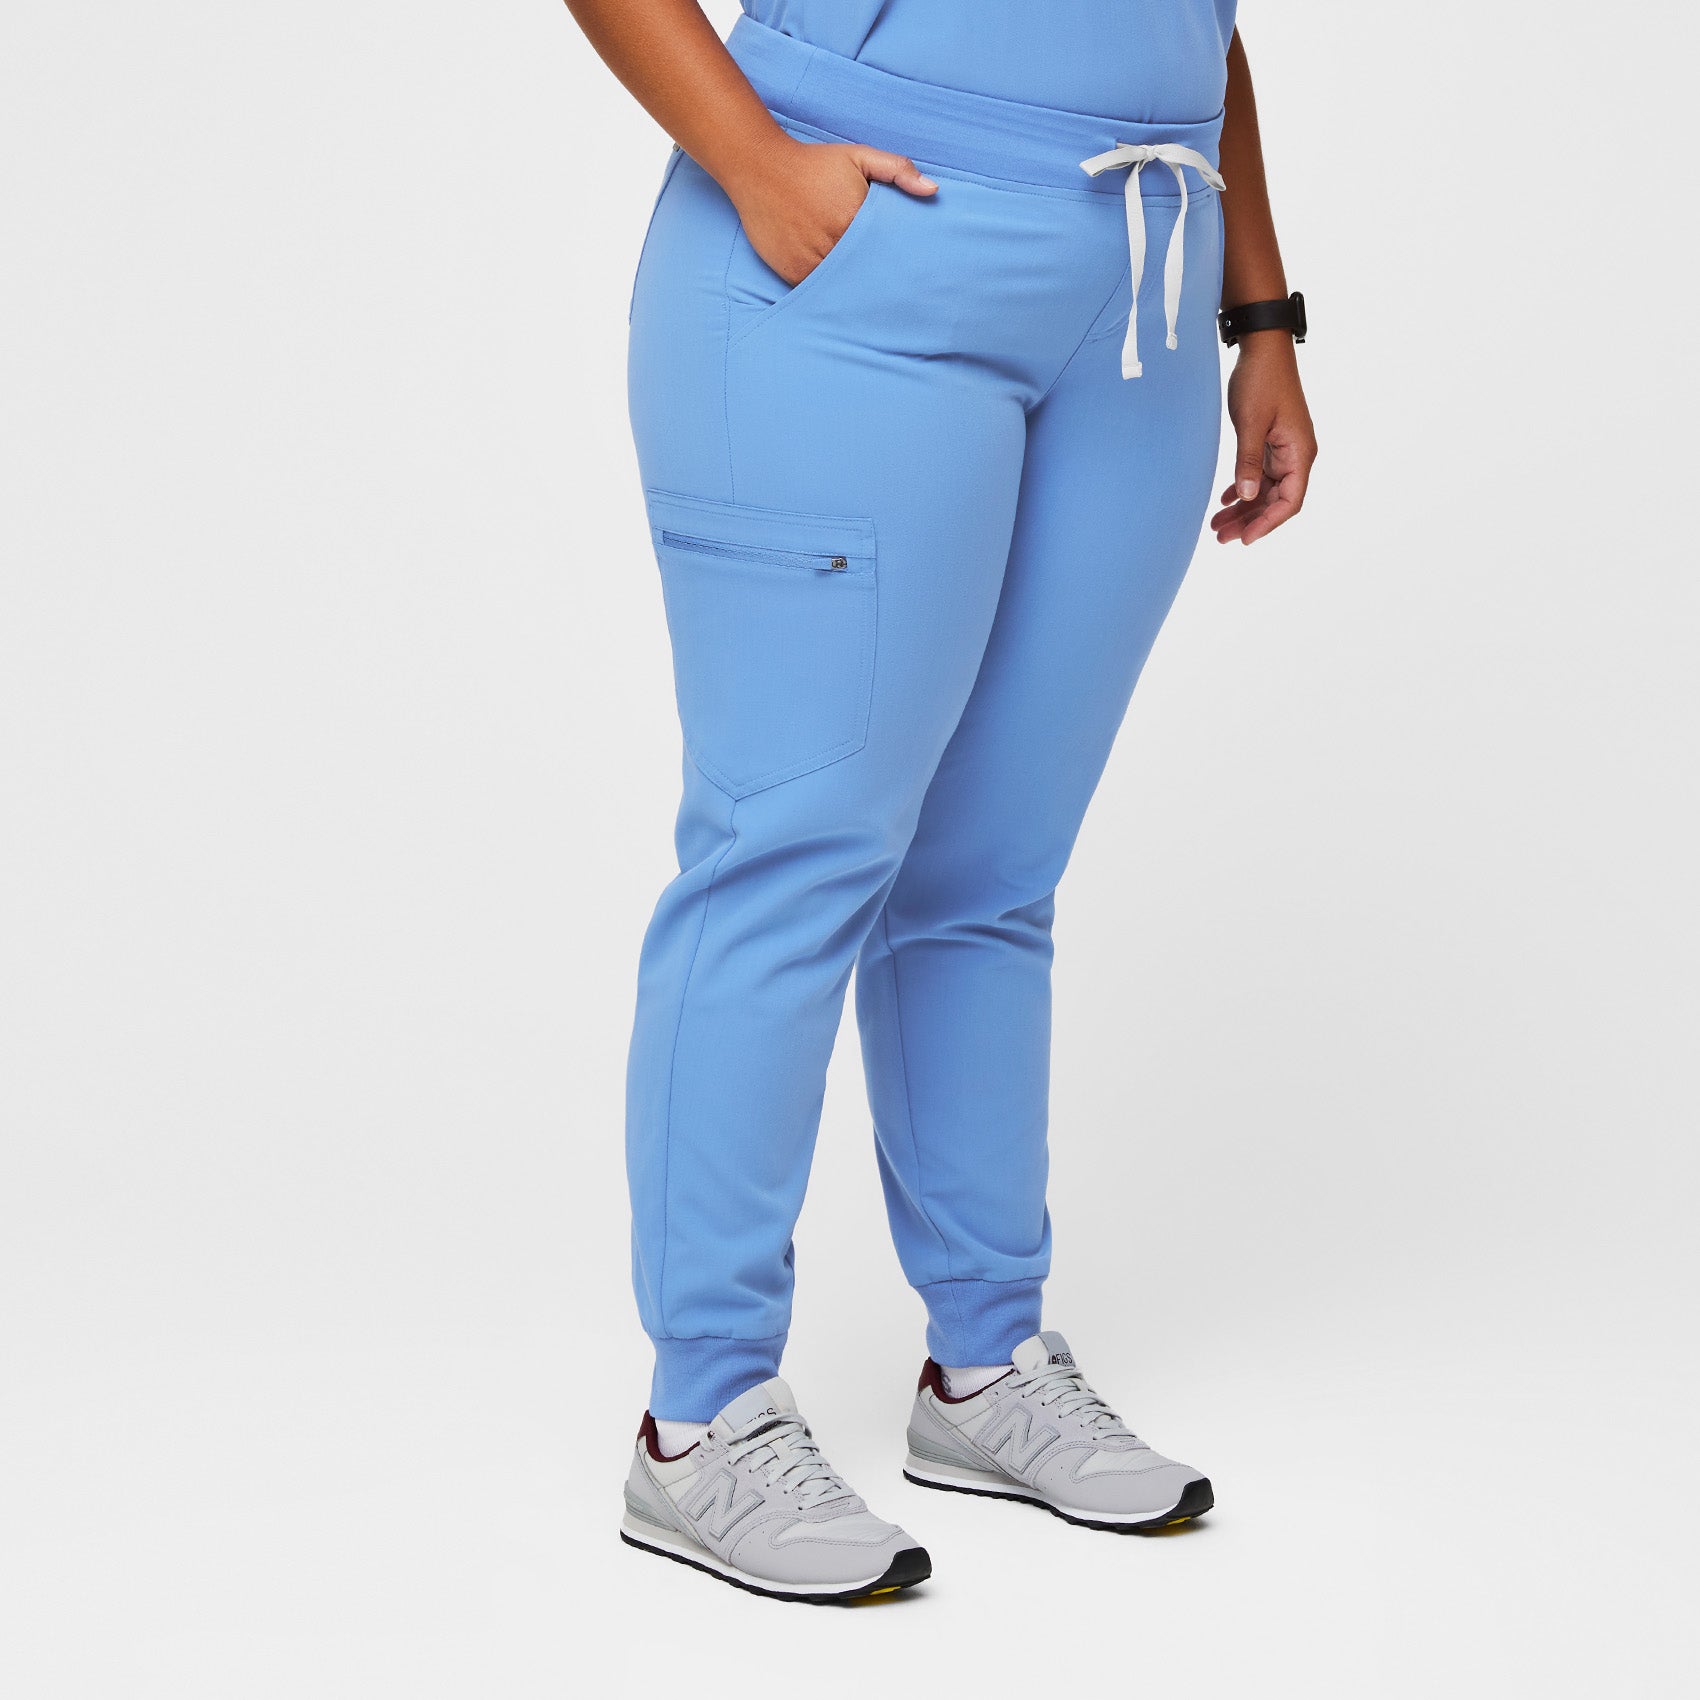 ave Women's Jogger-Style Scrub Pants Caribbean Blue Size 2XL Tall